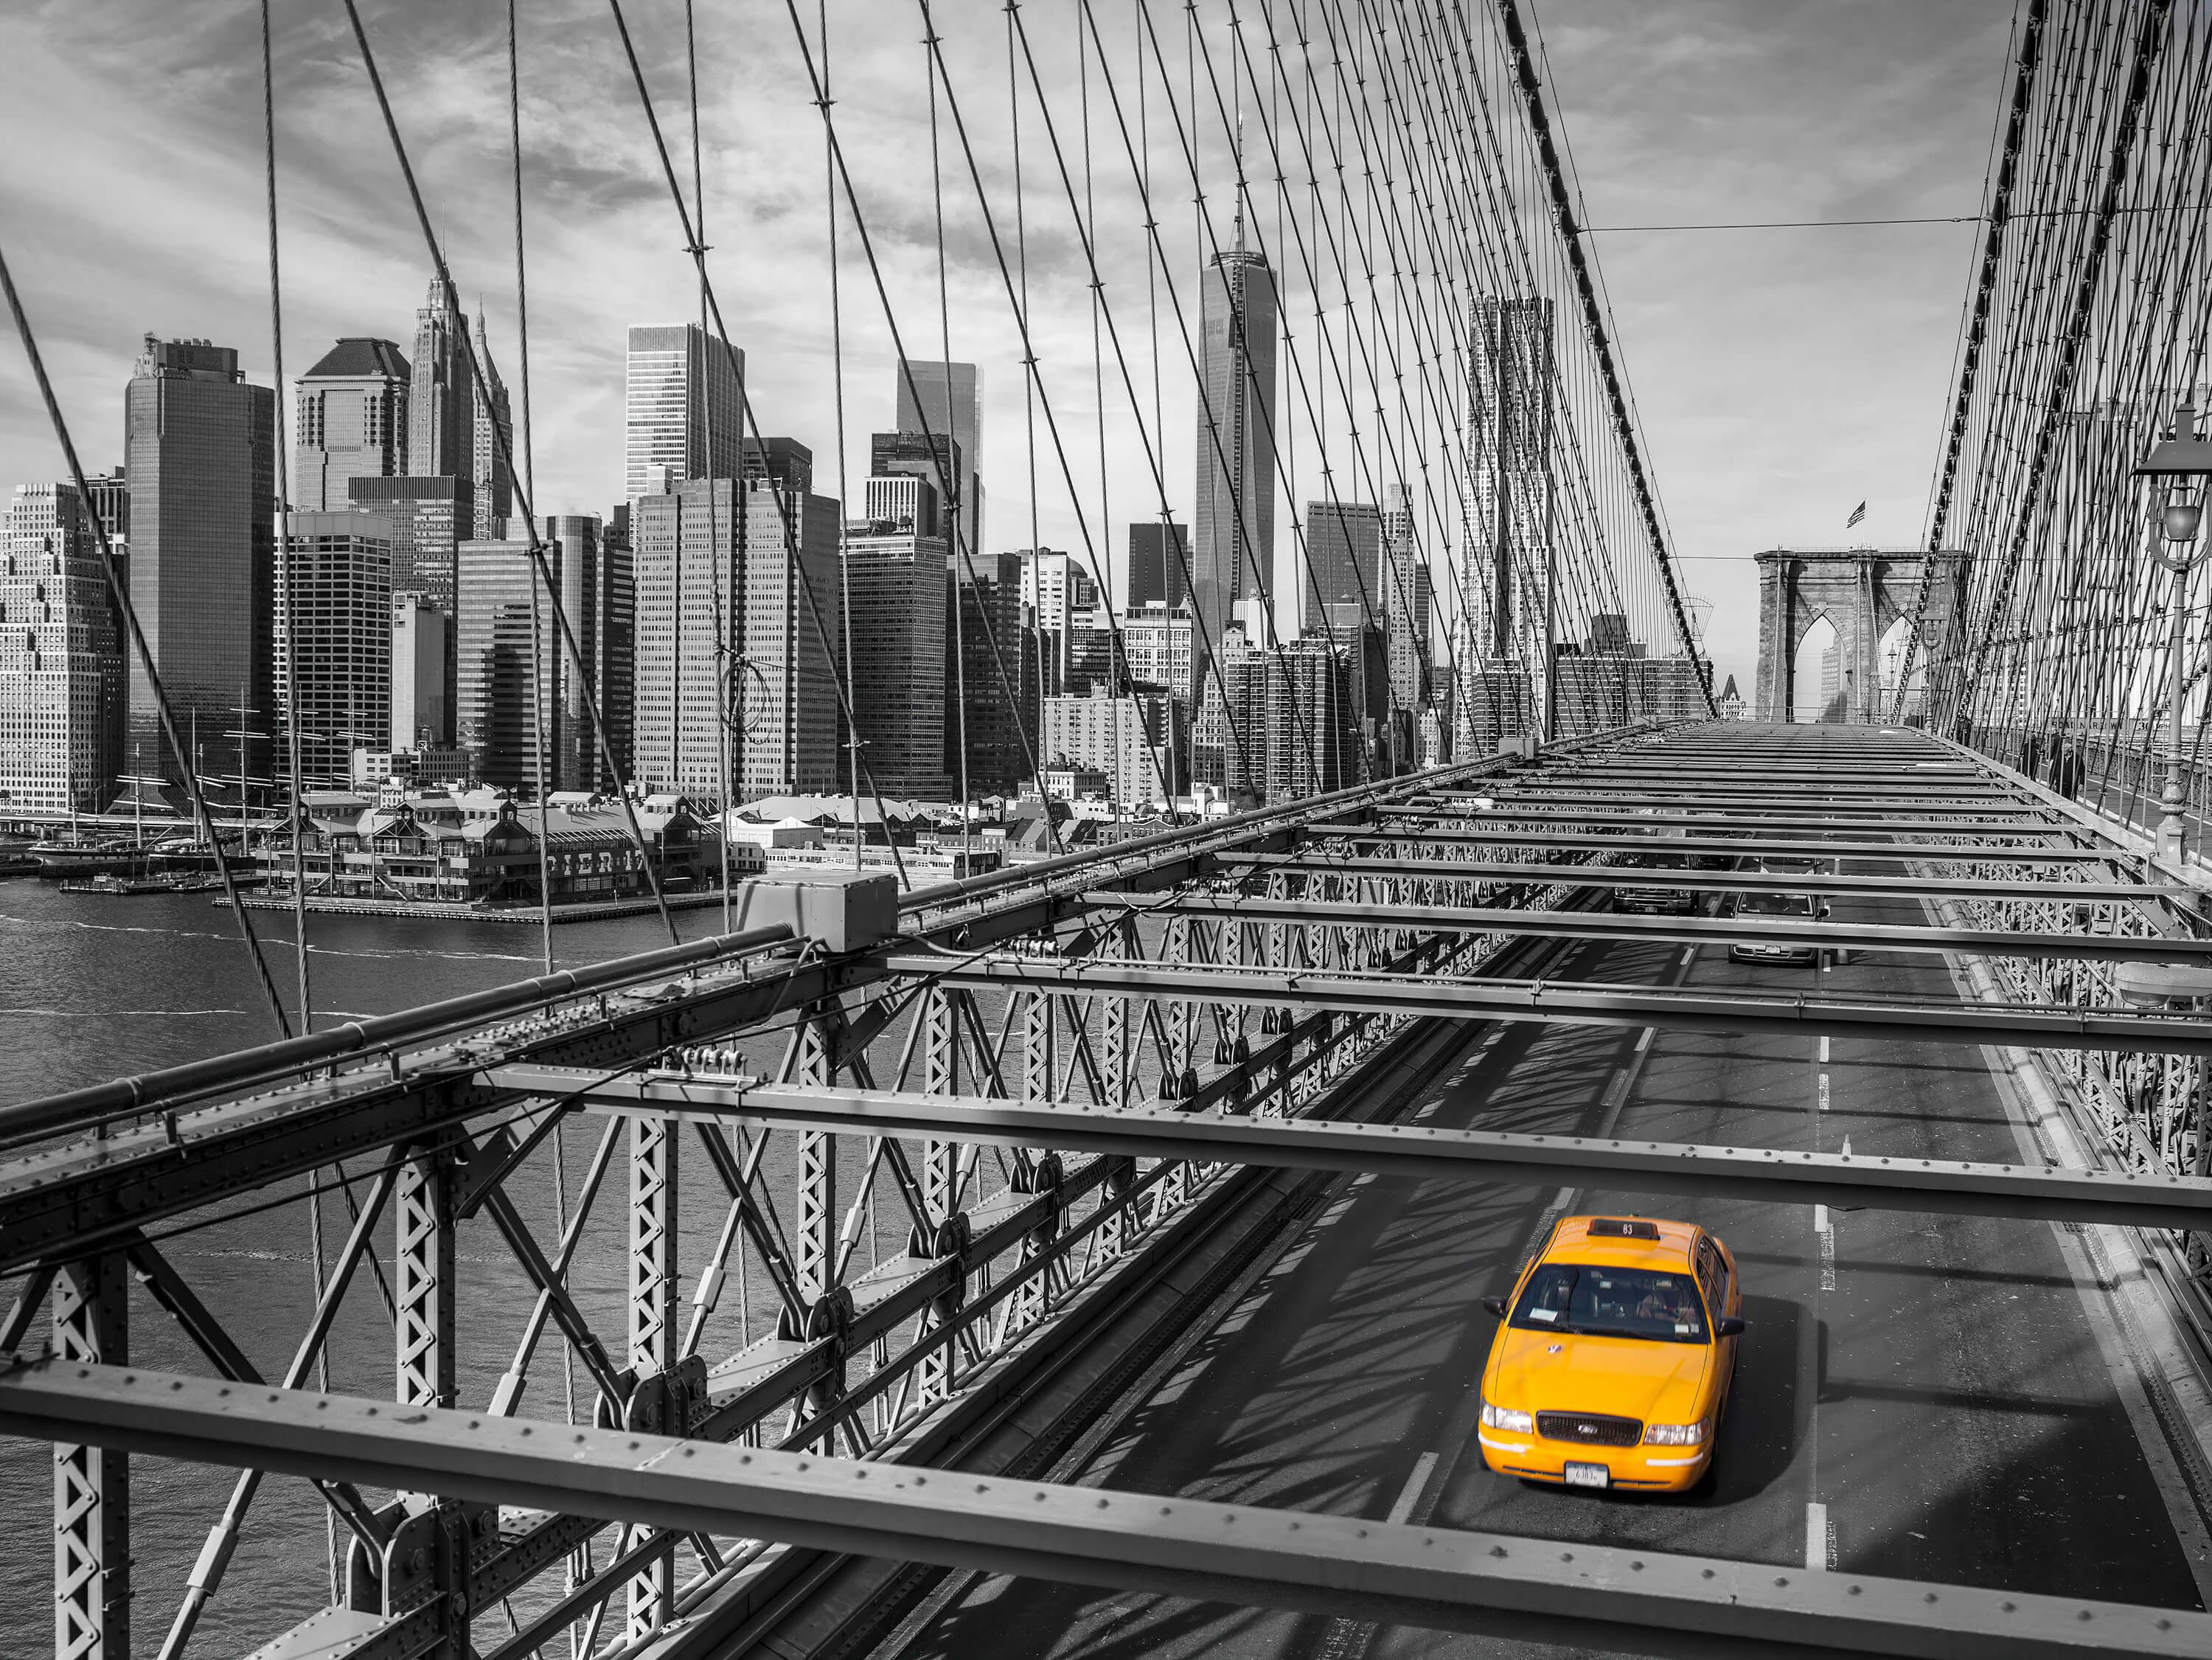  Ein Taxi über die Brooklyn-Brücke